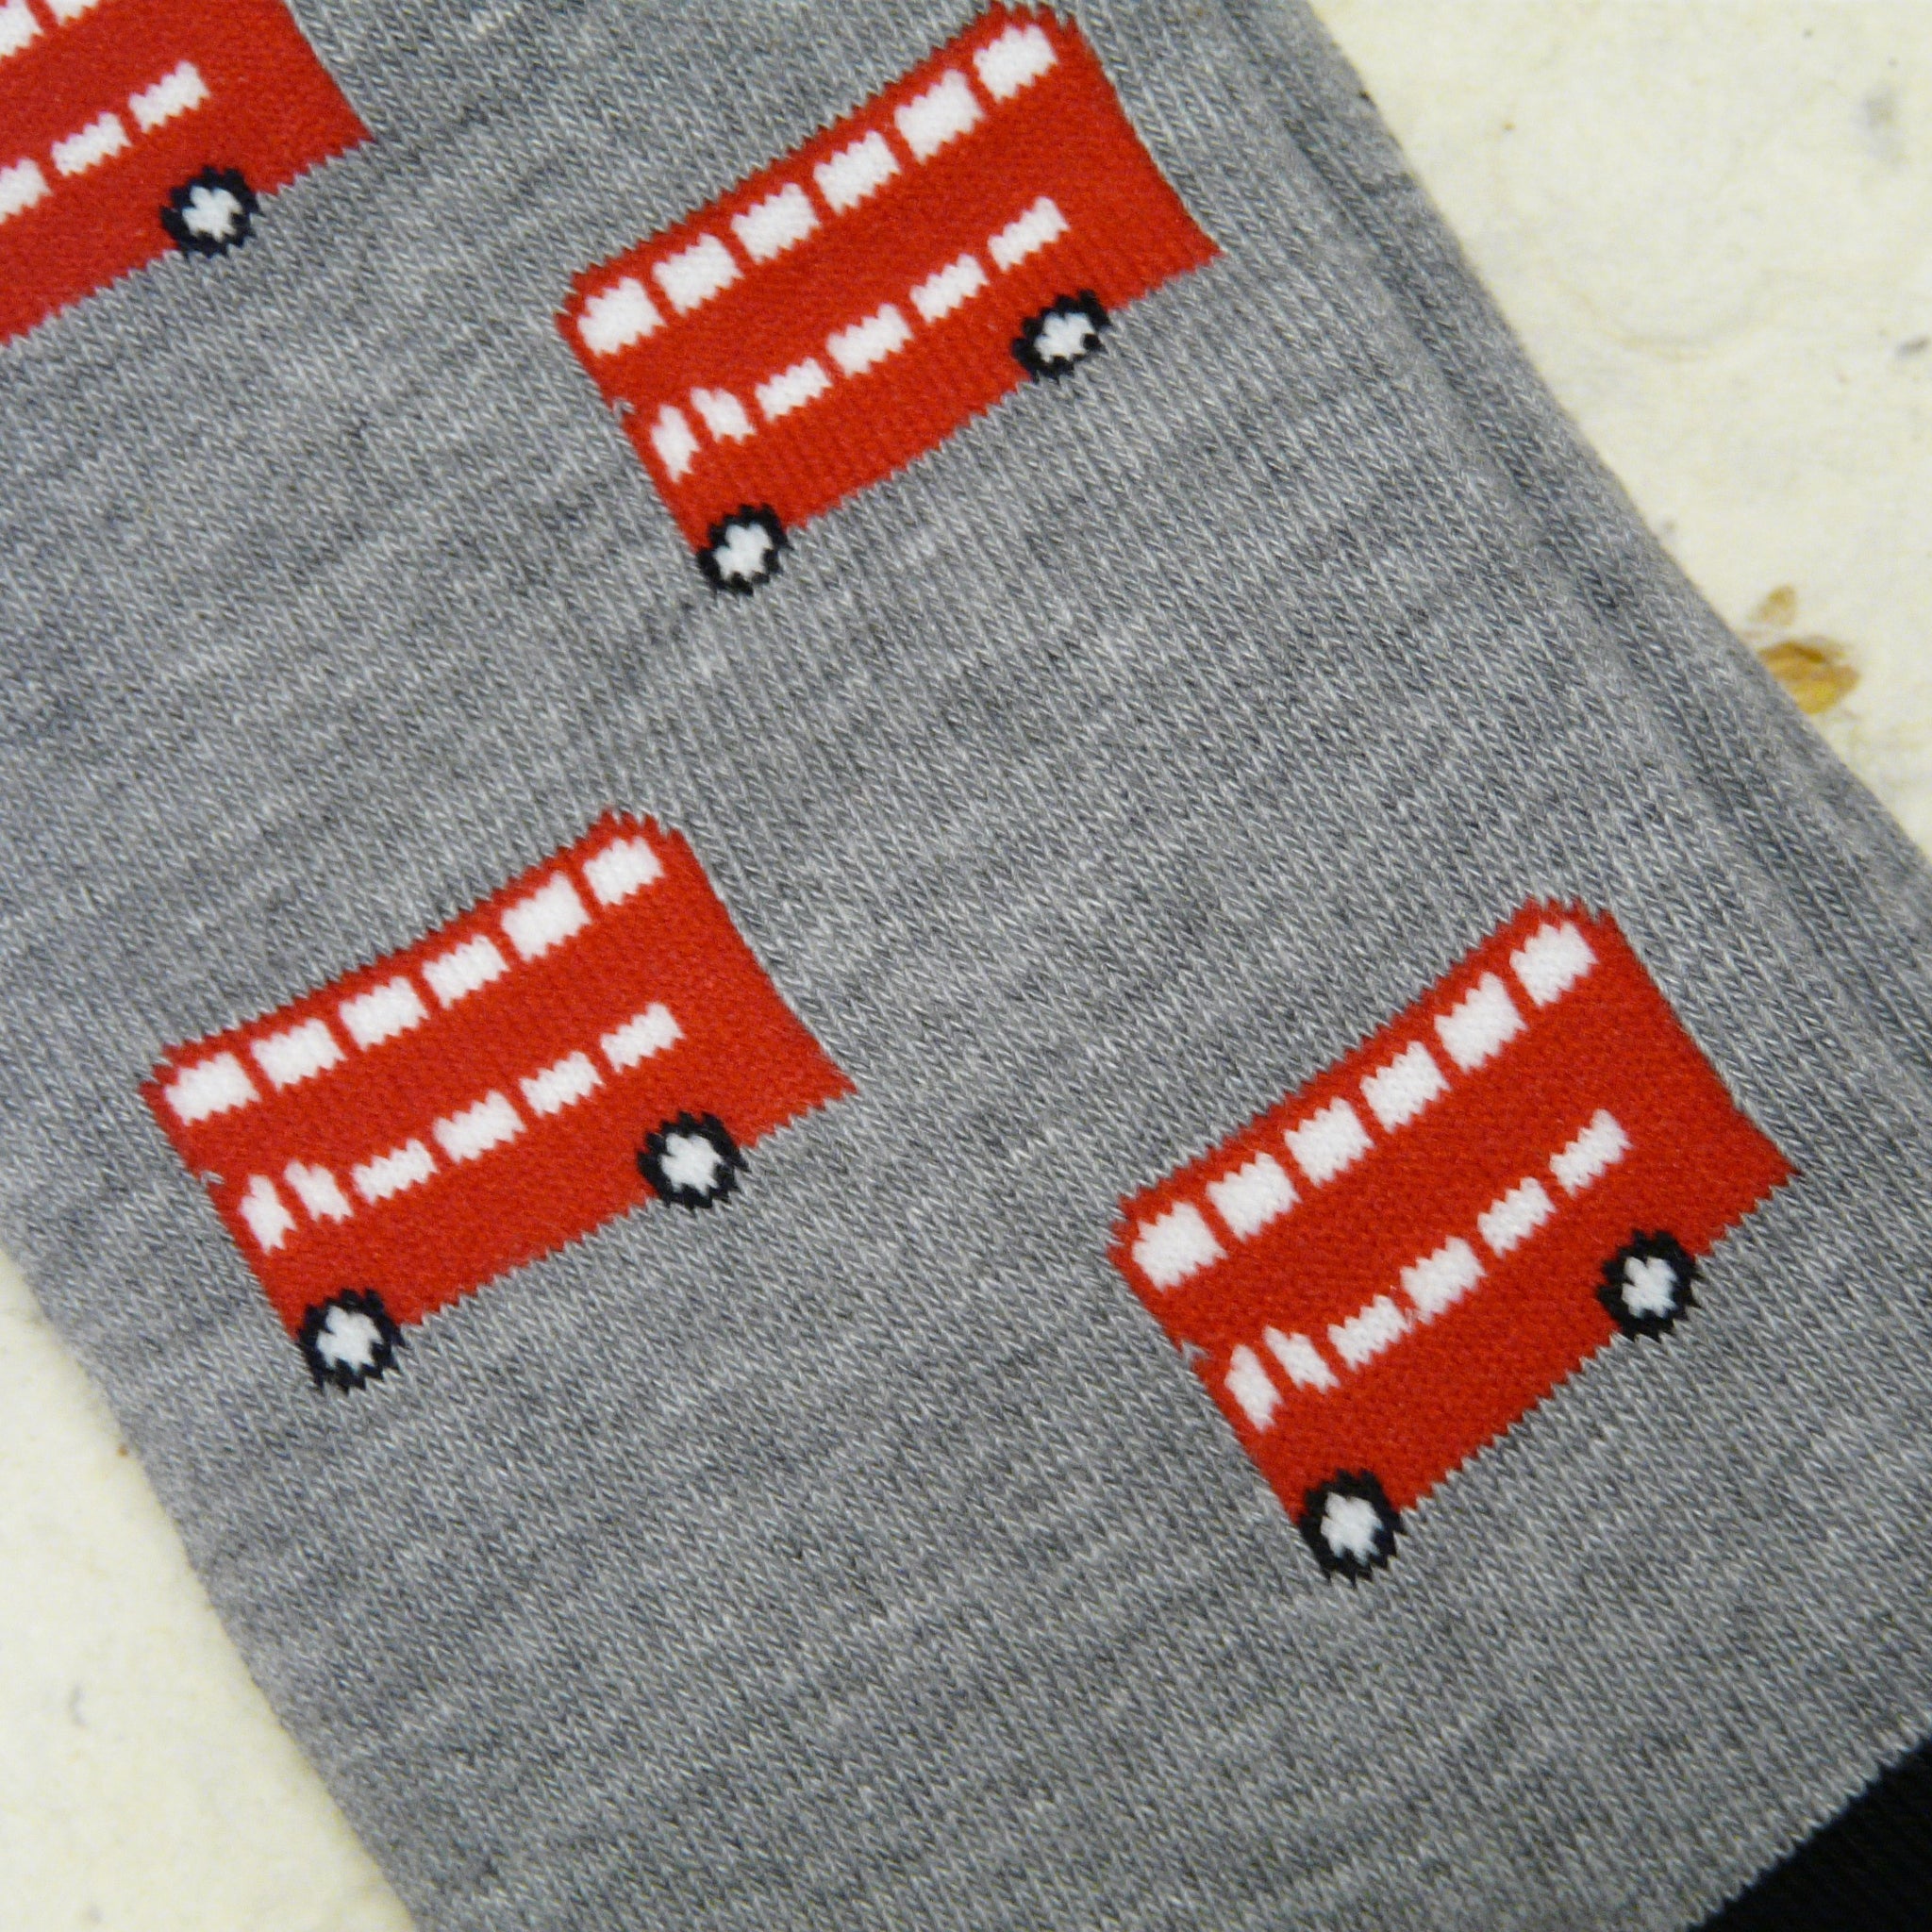 Mid Grey Marle London Red Buses Socks